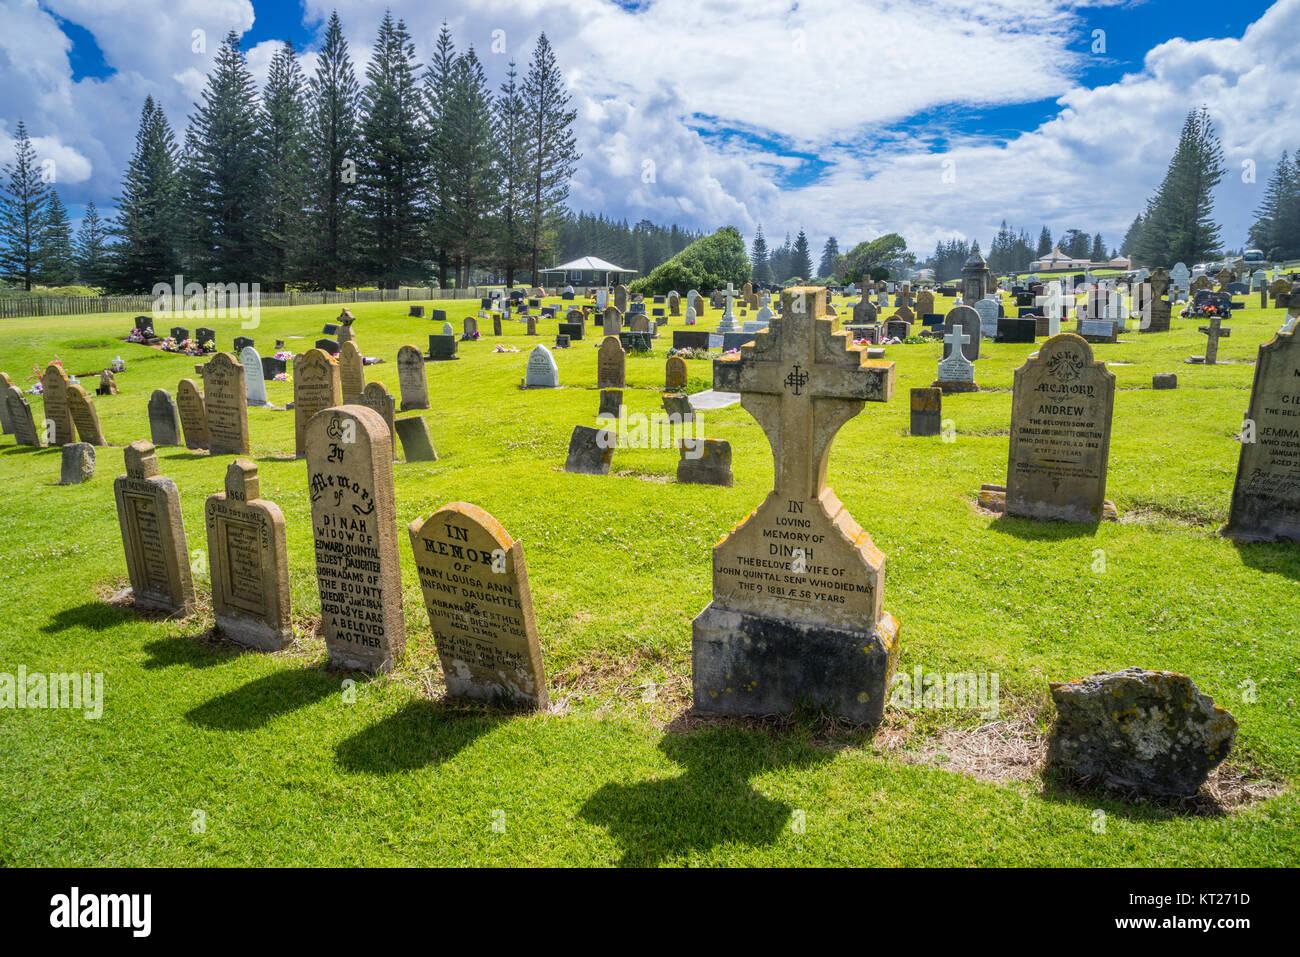 Isola Norfolk, australiano territorio esterno, Kingston, la storica Isola Norfolk cimitero comprende tombe dei carcerati, soldati e Pitcairn Islan Foto Stock